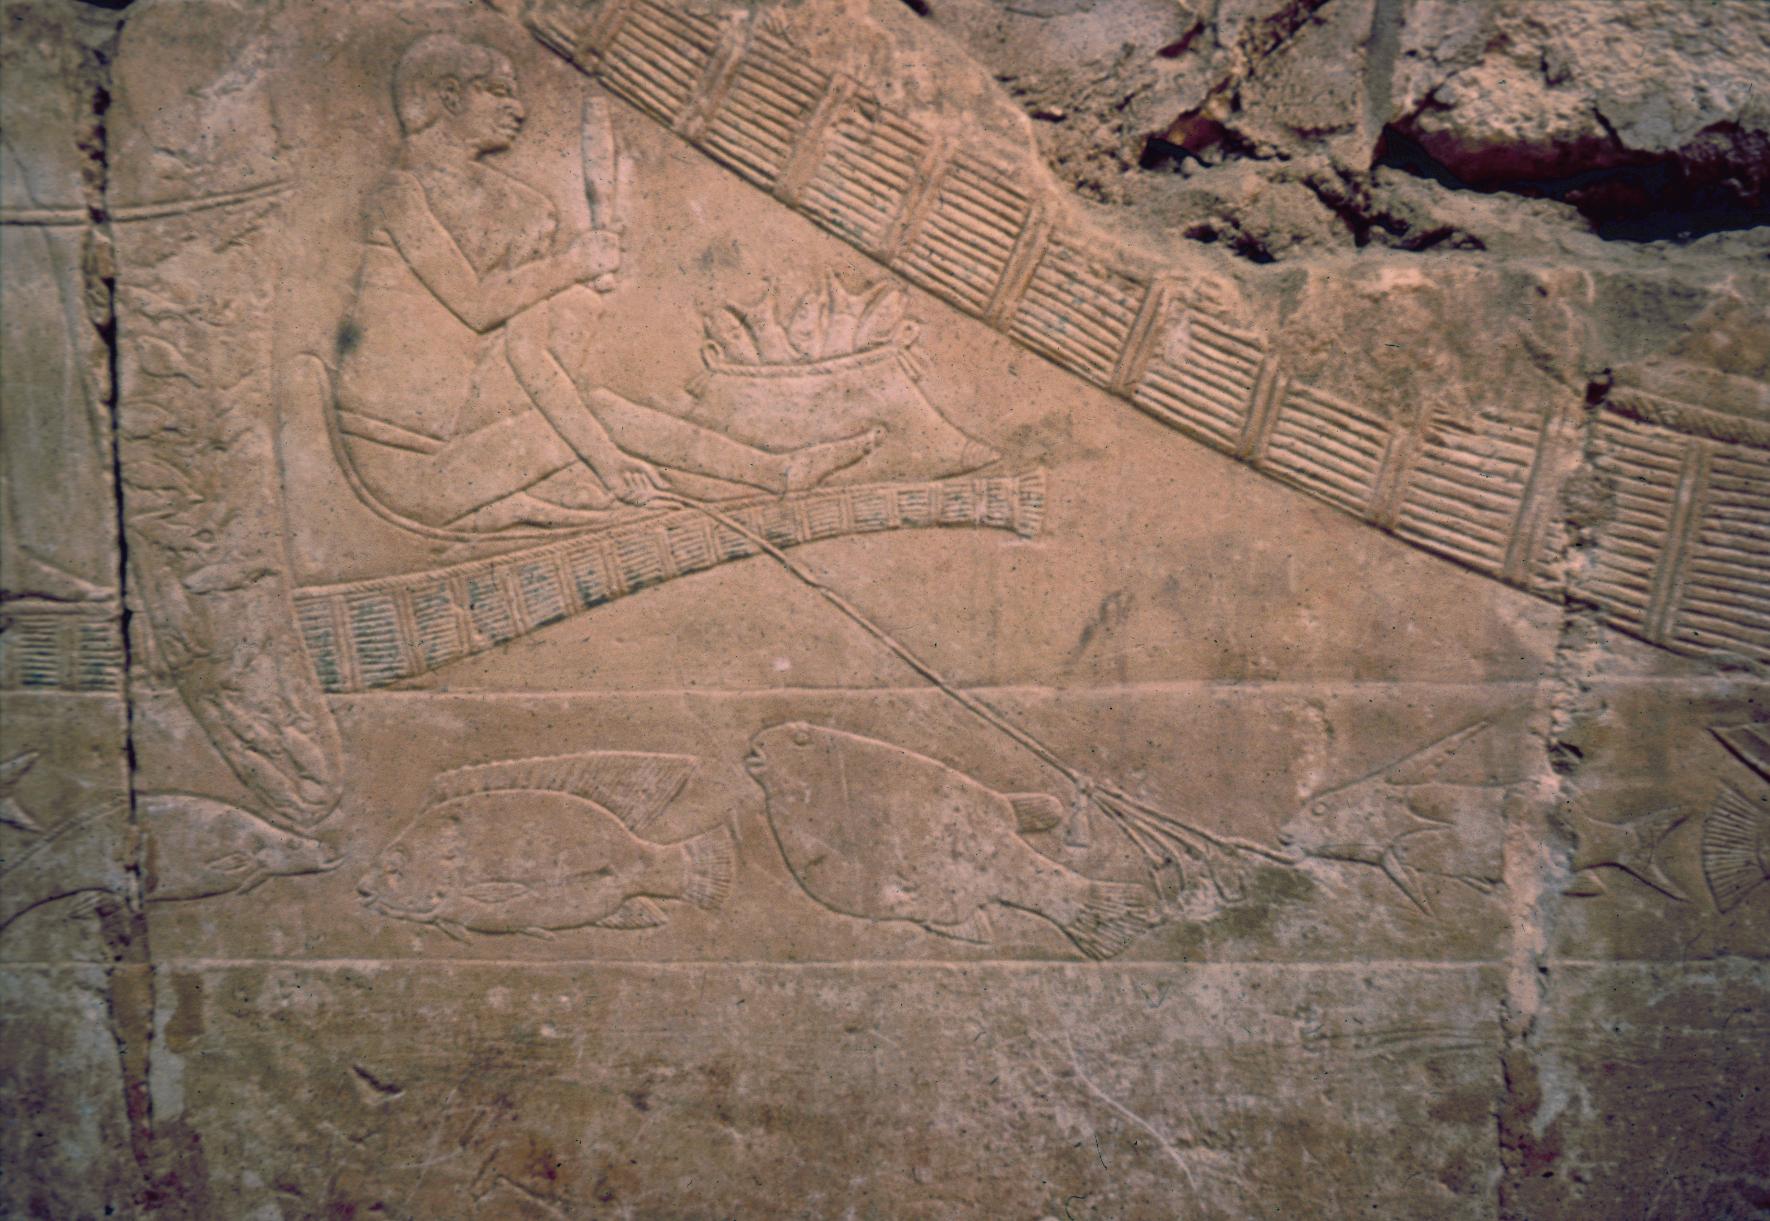 Hieroglyphics in Tomb Showing Fisherman